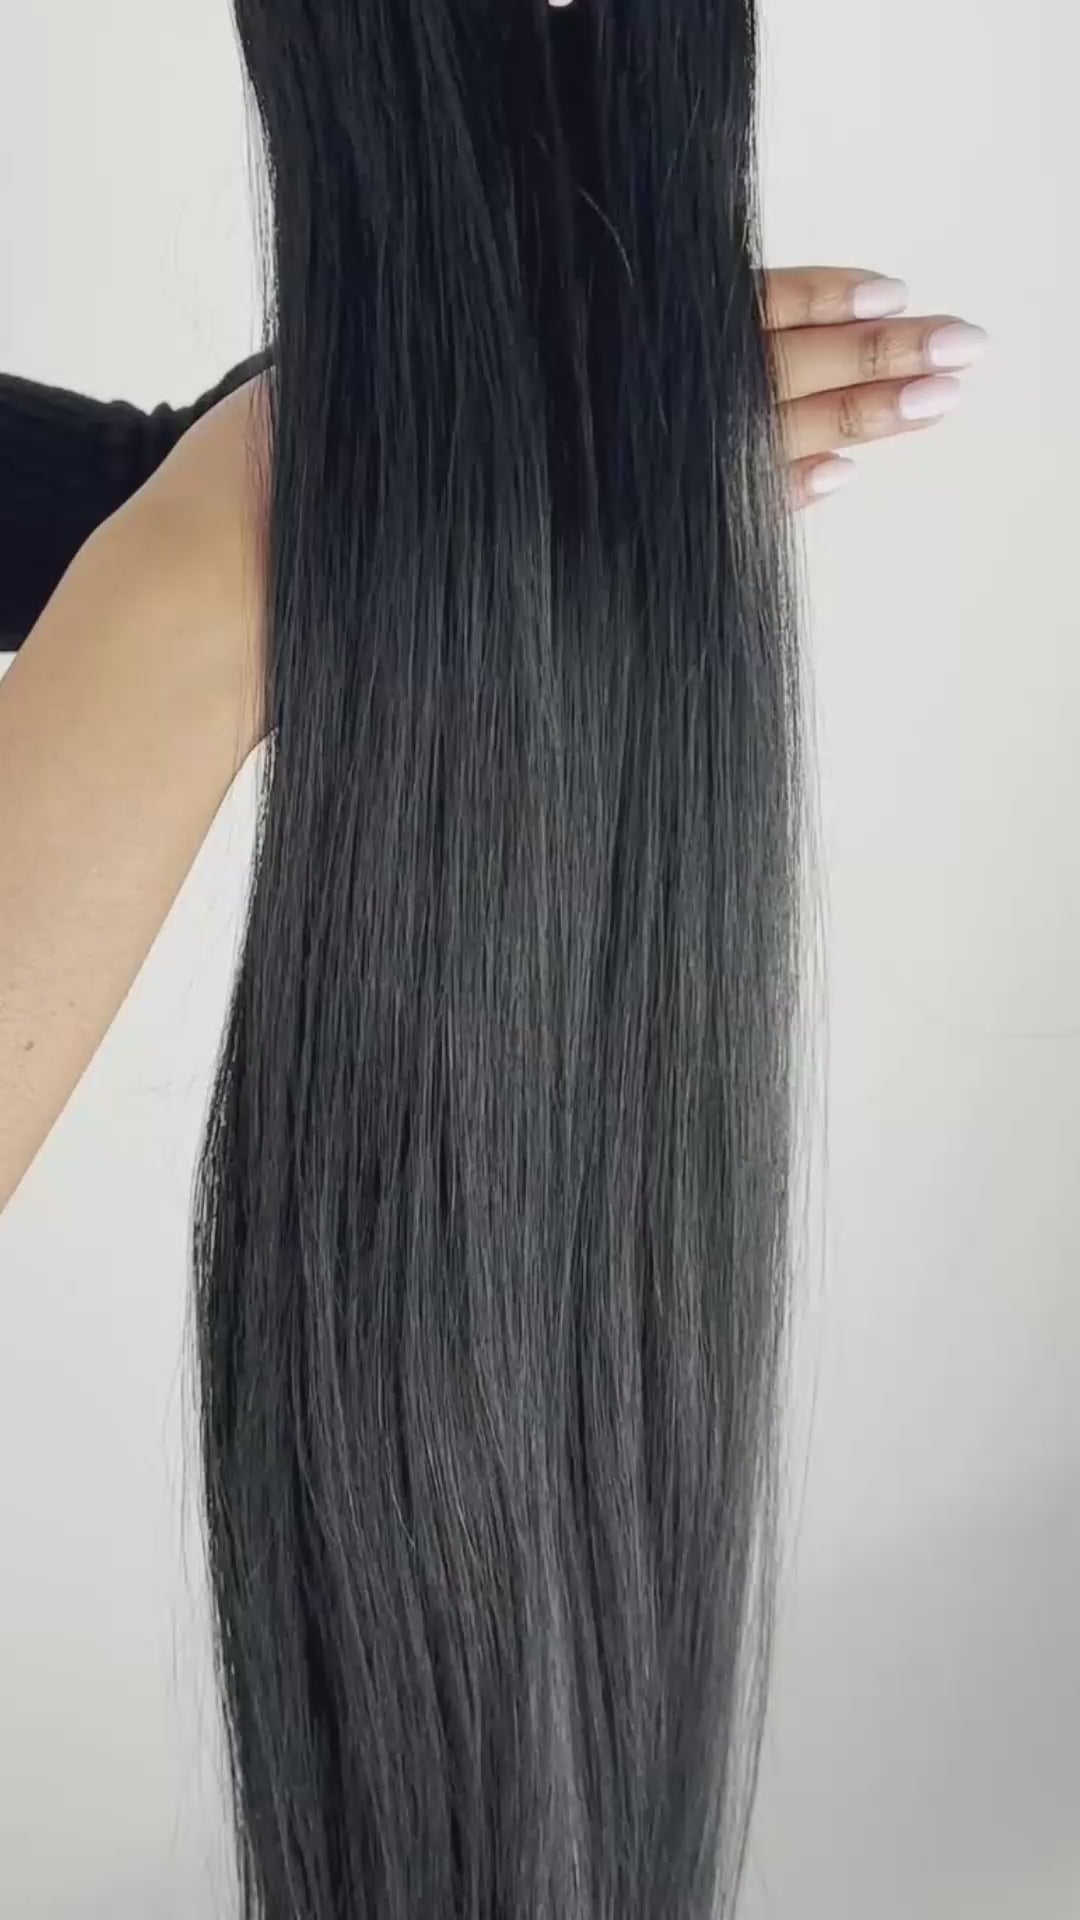 #1 Black AquaLyna Ponytail Hair Extension